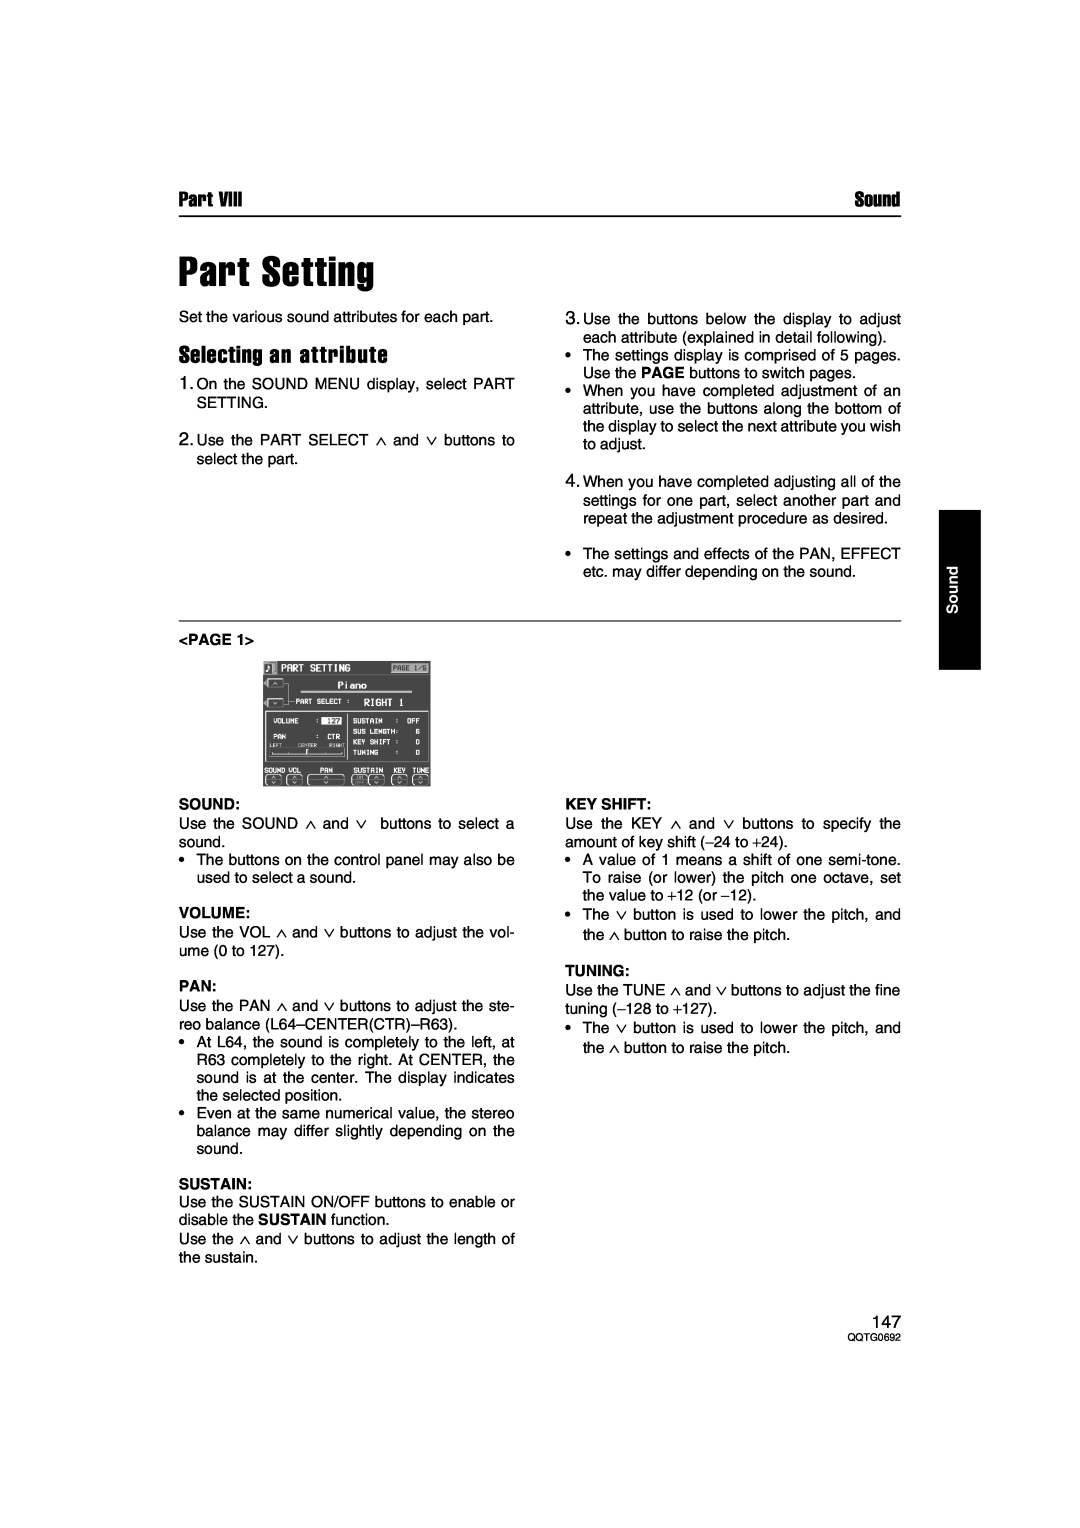 Panasonic SX-KN2400, SX-KN2600 Selecting an attribute, Page Sound, Volume, Sustain, Key Shift, Tuning, Part Setting 